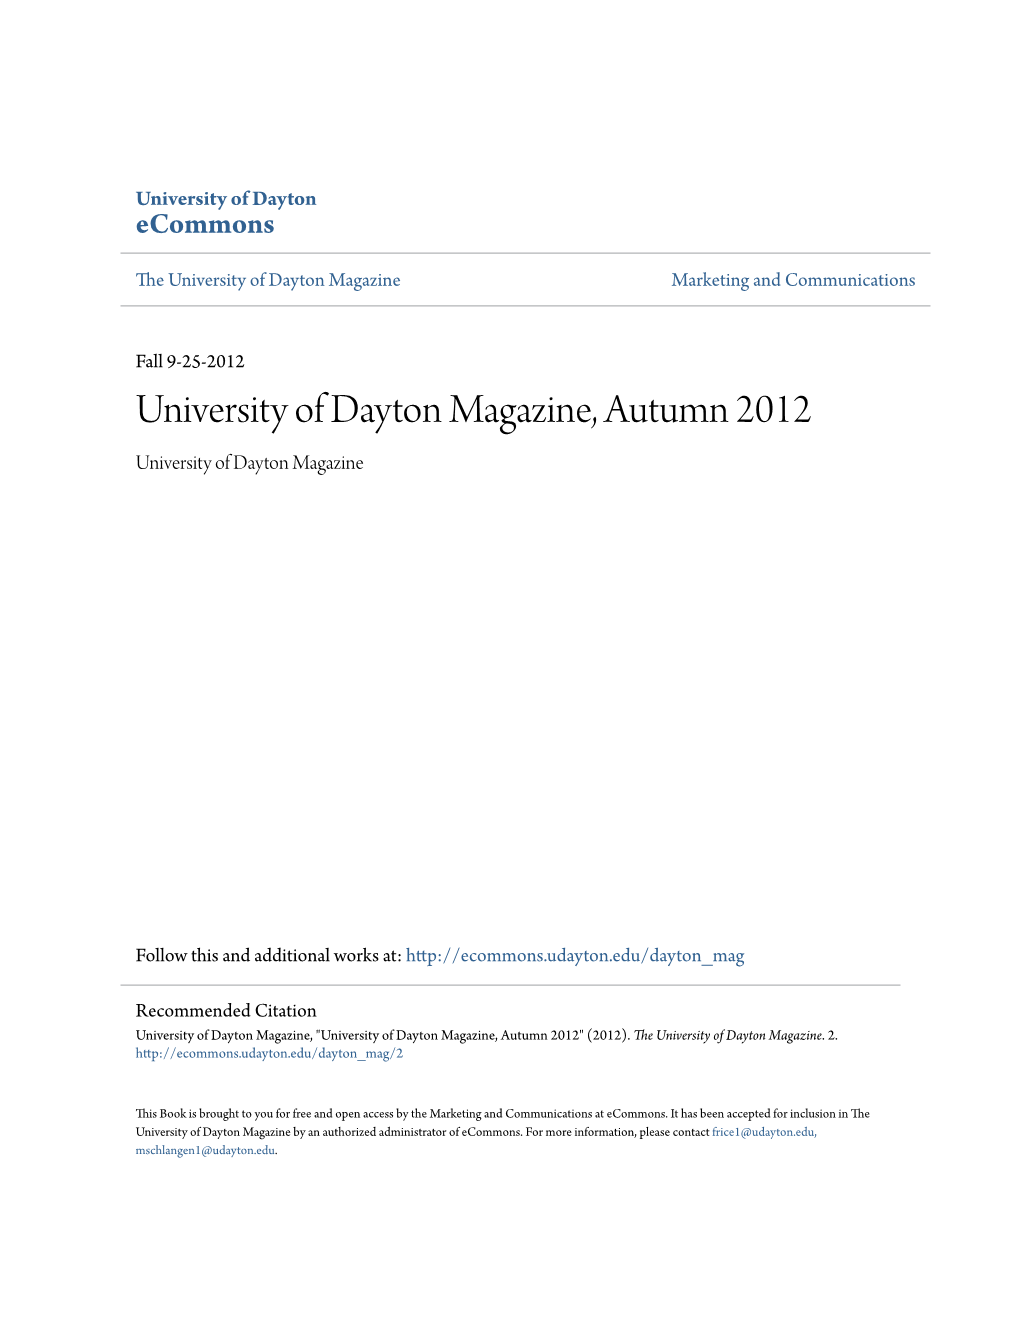 University of Dayton Magazine, Autumn 2012 University of Dayton Magazine